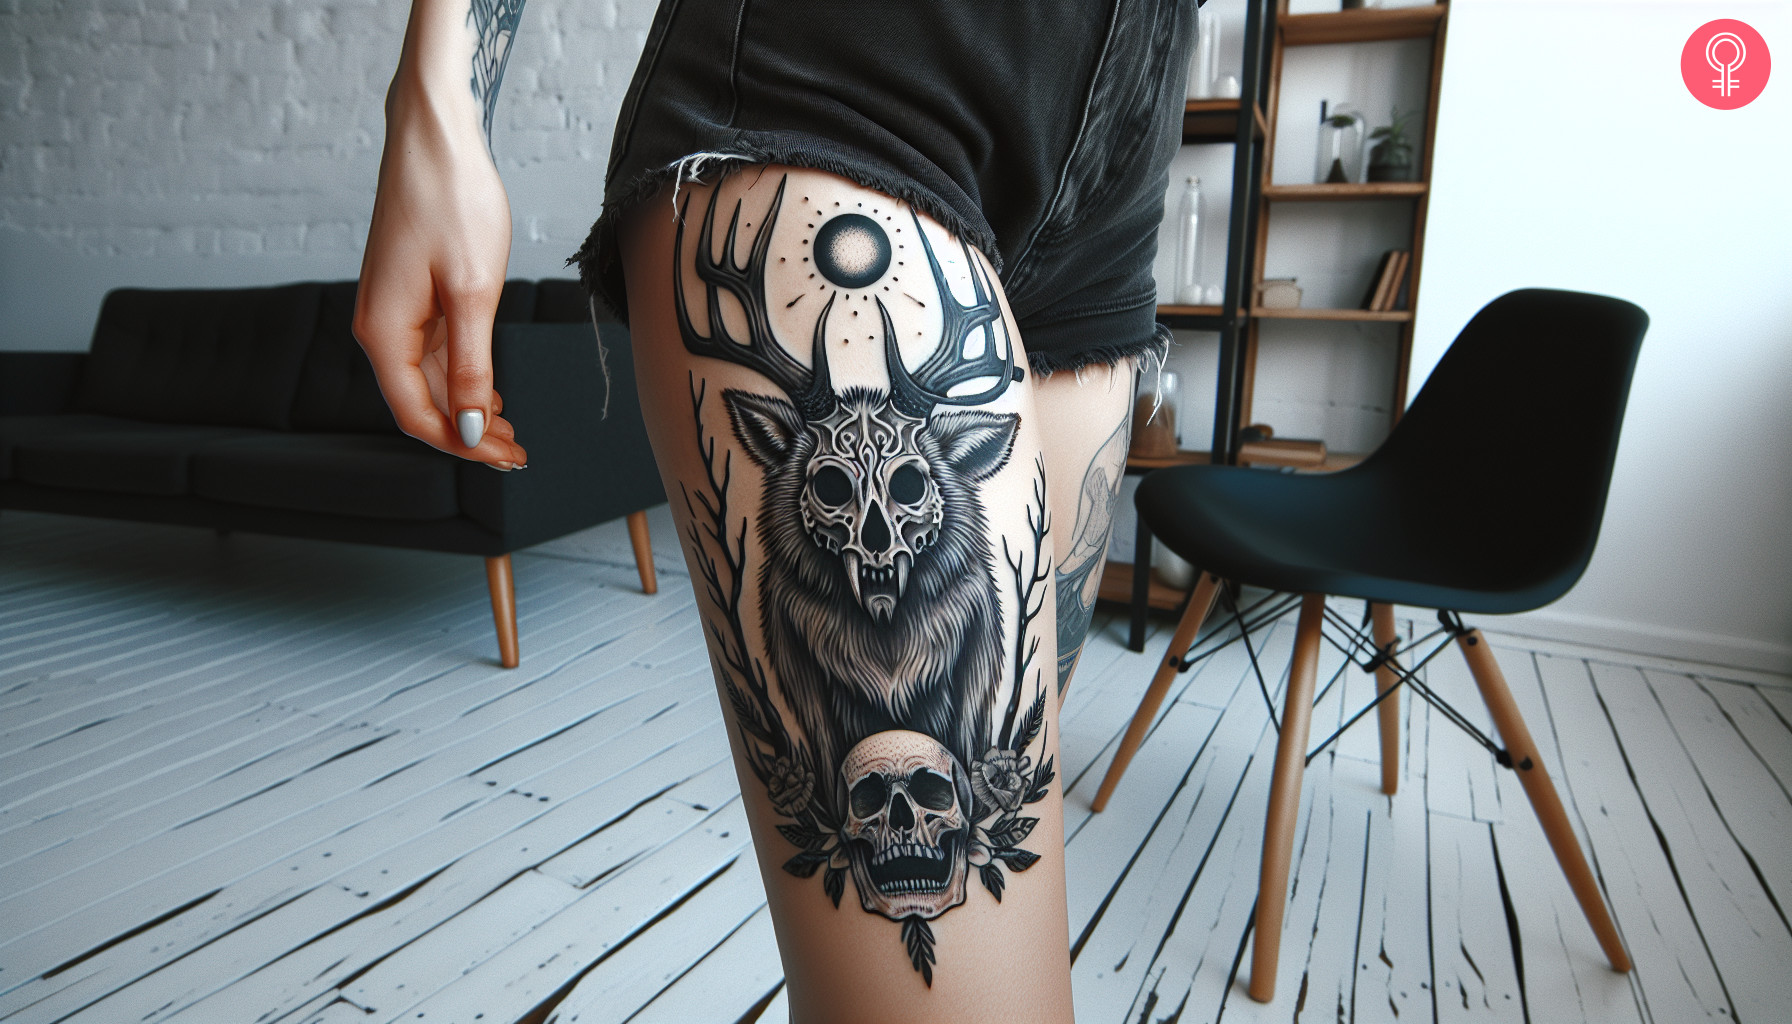 A wendigo skull tattoo on the thigh